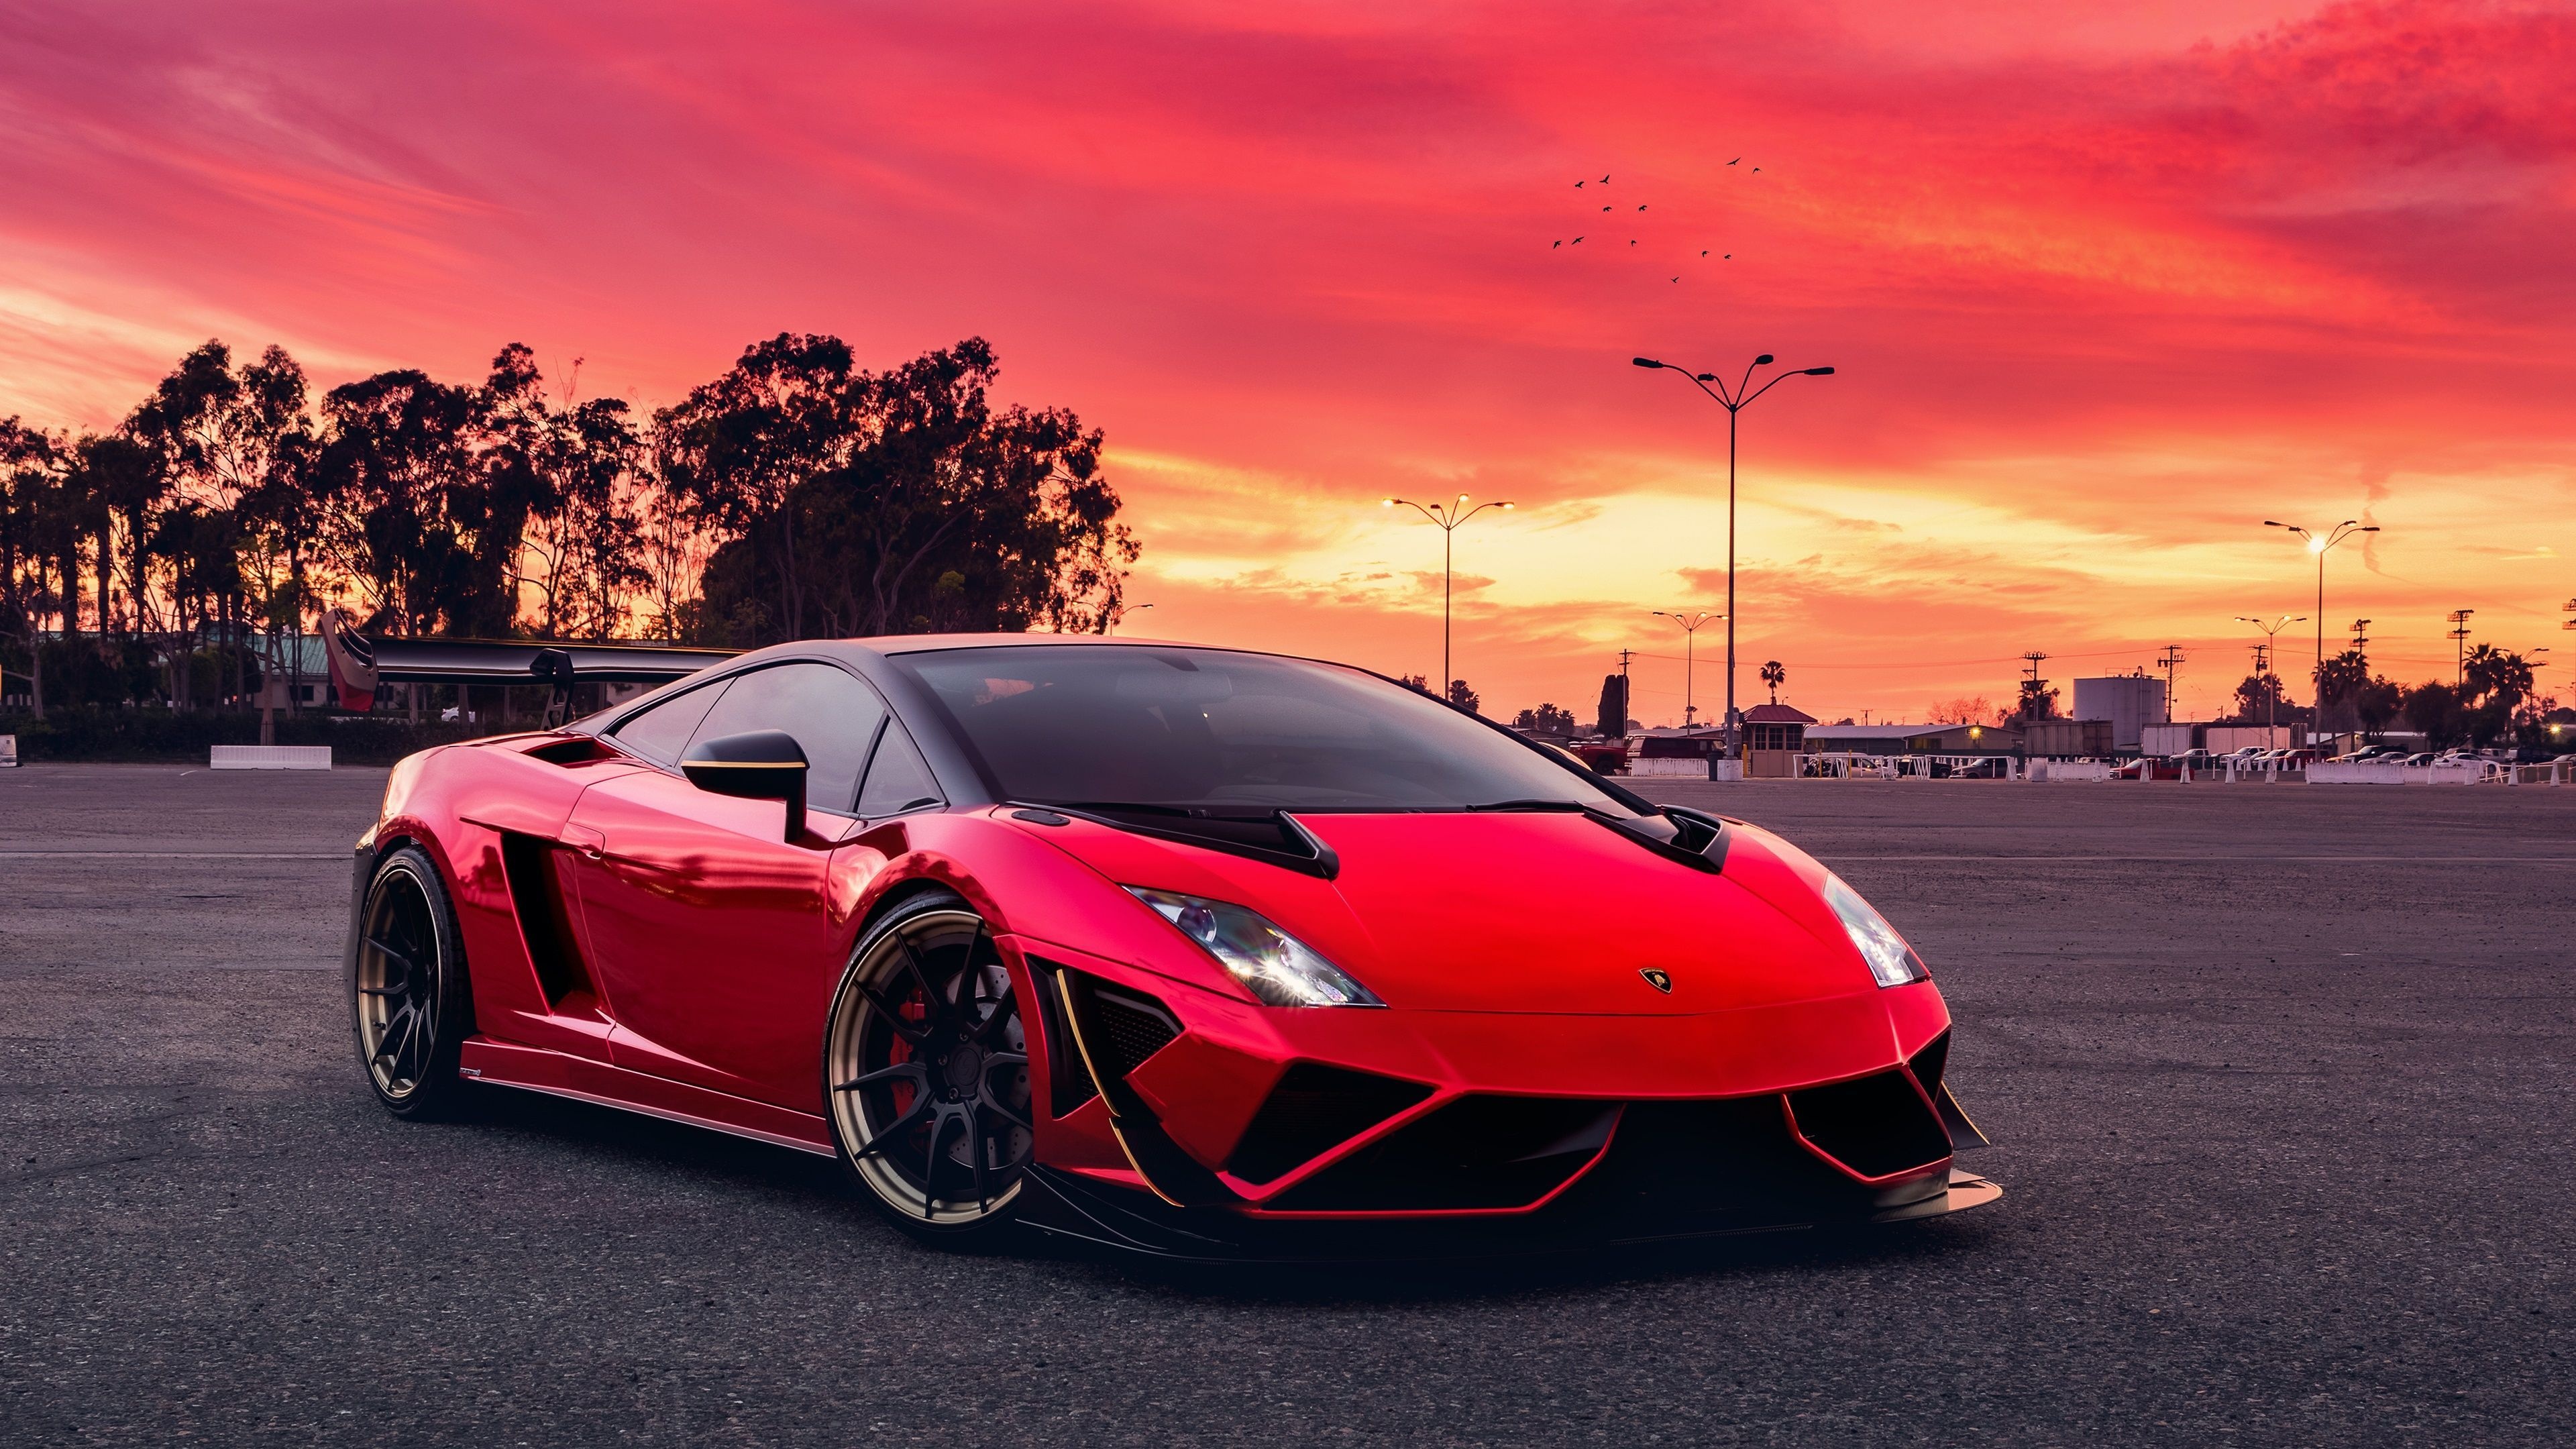 Red Lamborghini Aventador, Striking color, Powerful performance, Head-turner, 3840x2160 4K Desktop